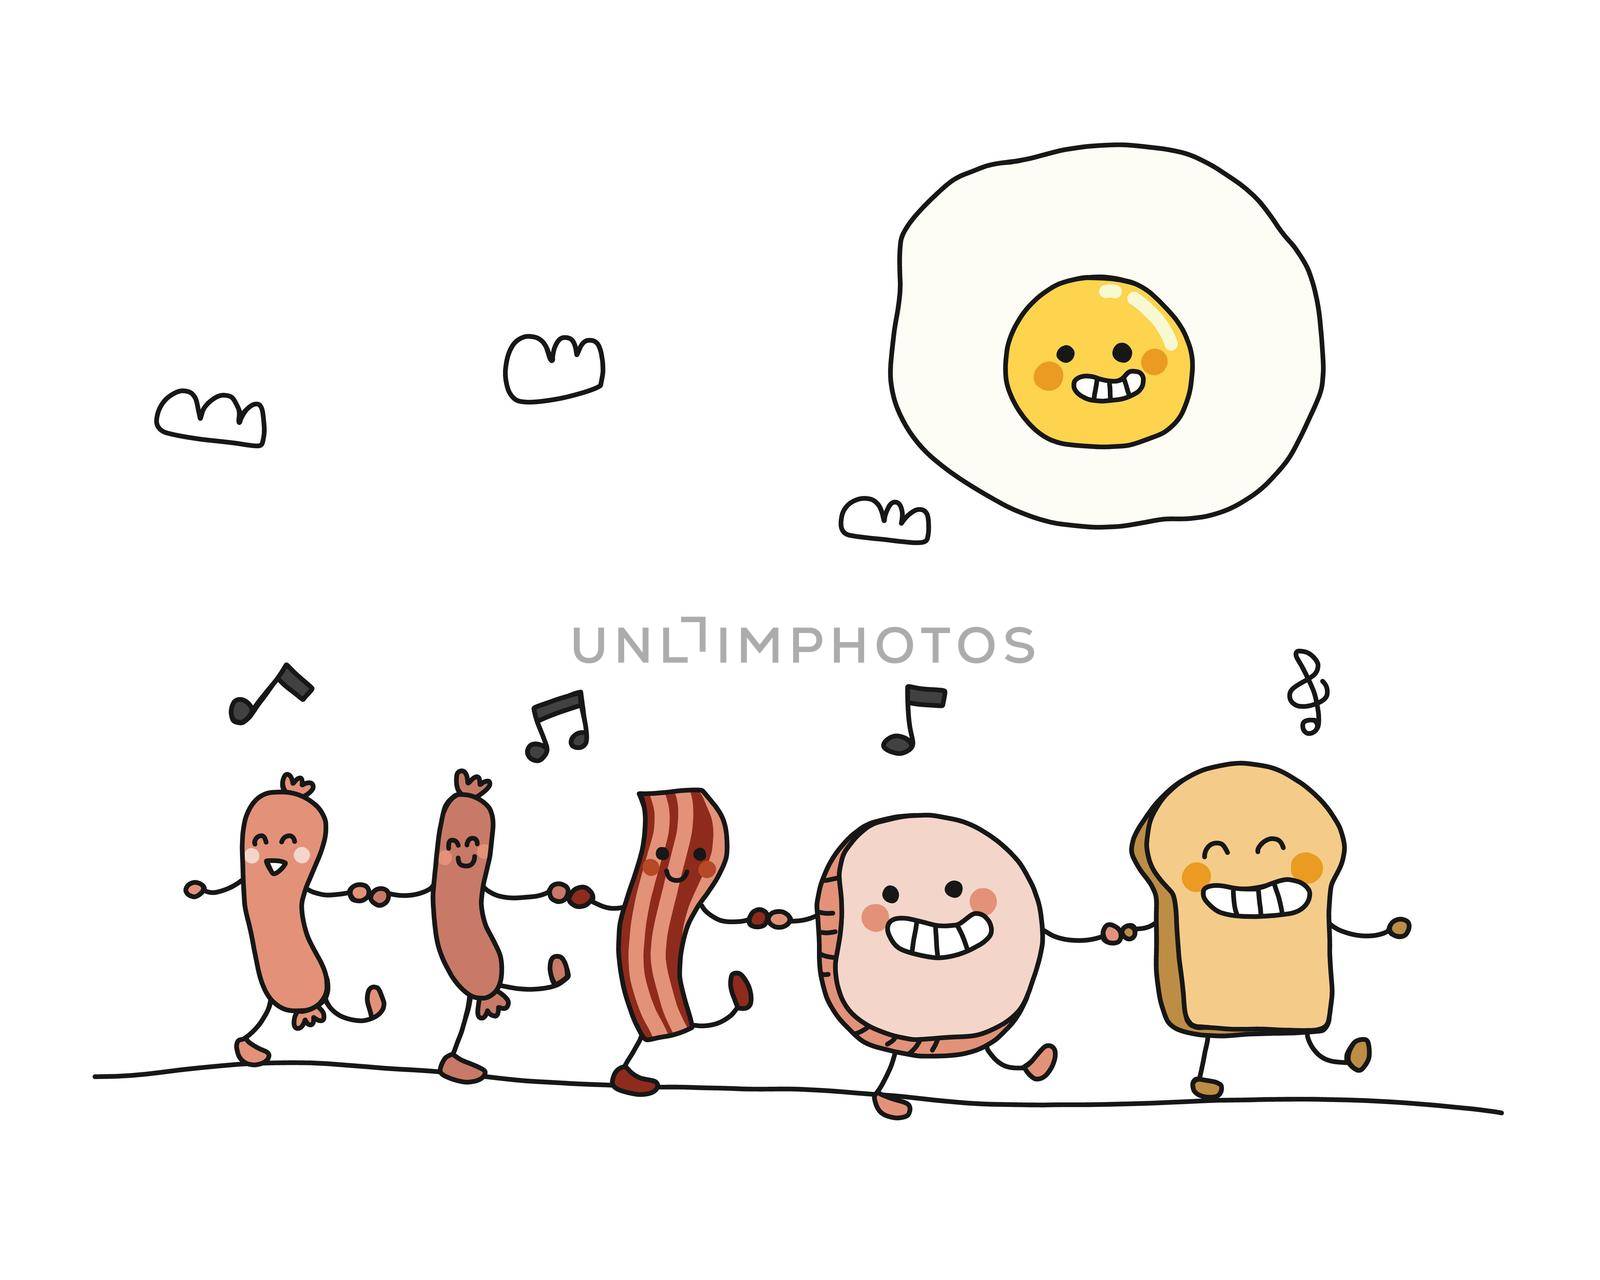 Breakfast friend cartoon doodle vector illustration by Yoopho